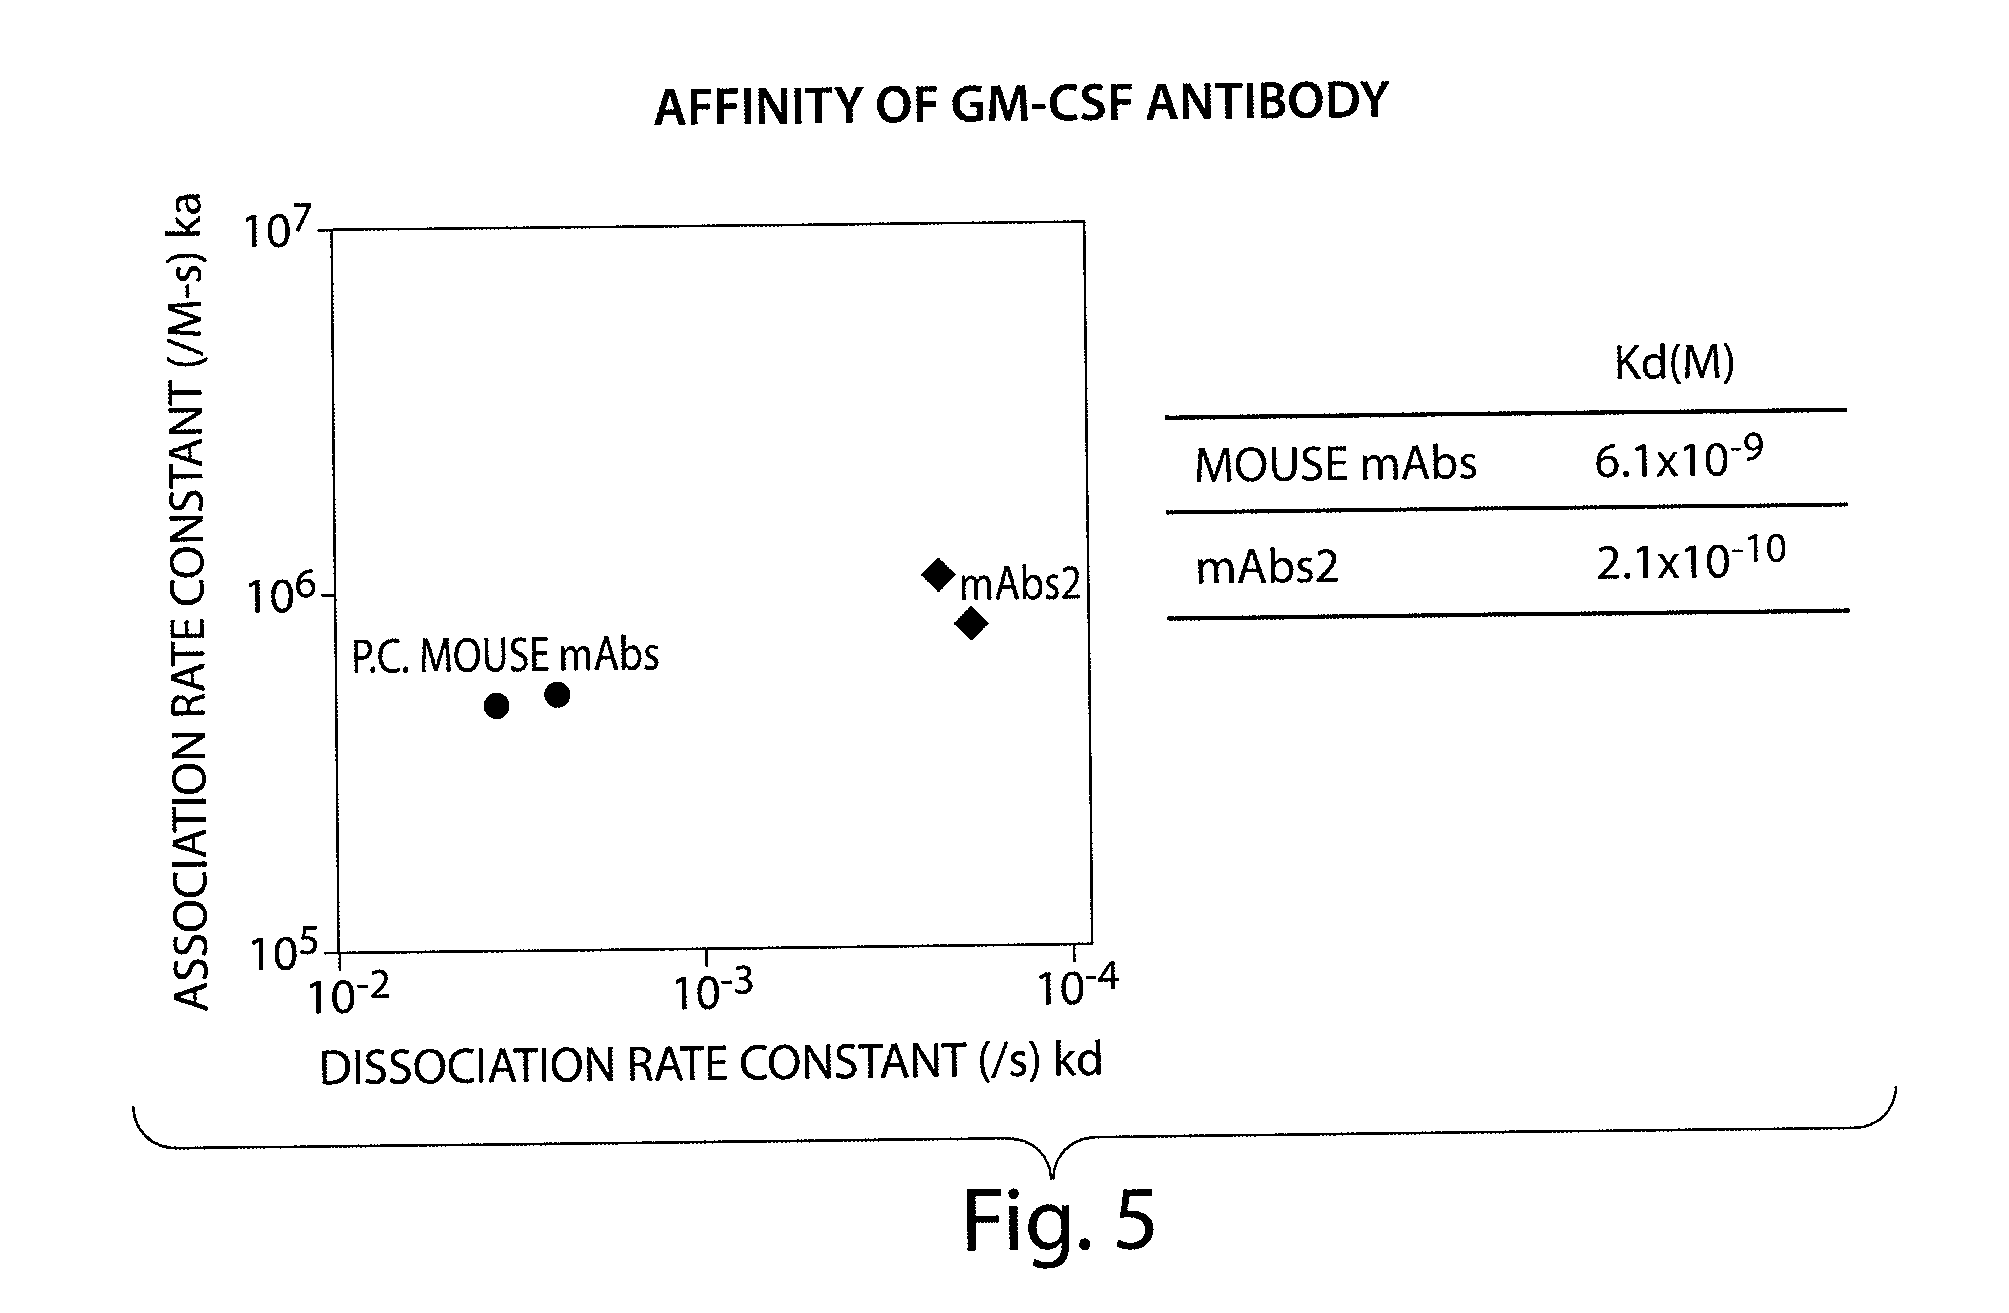 Human monoclonal antibody binding to hGM-CSF and its antigen binding portion